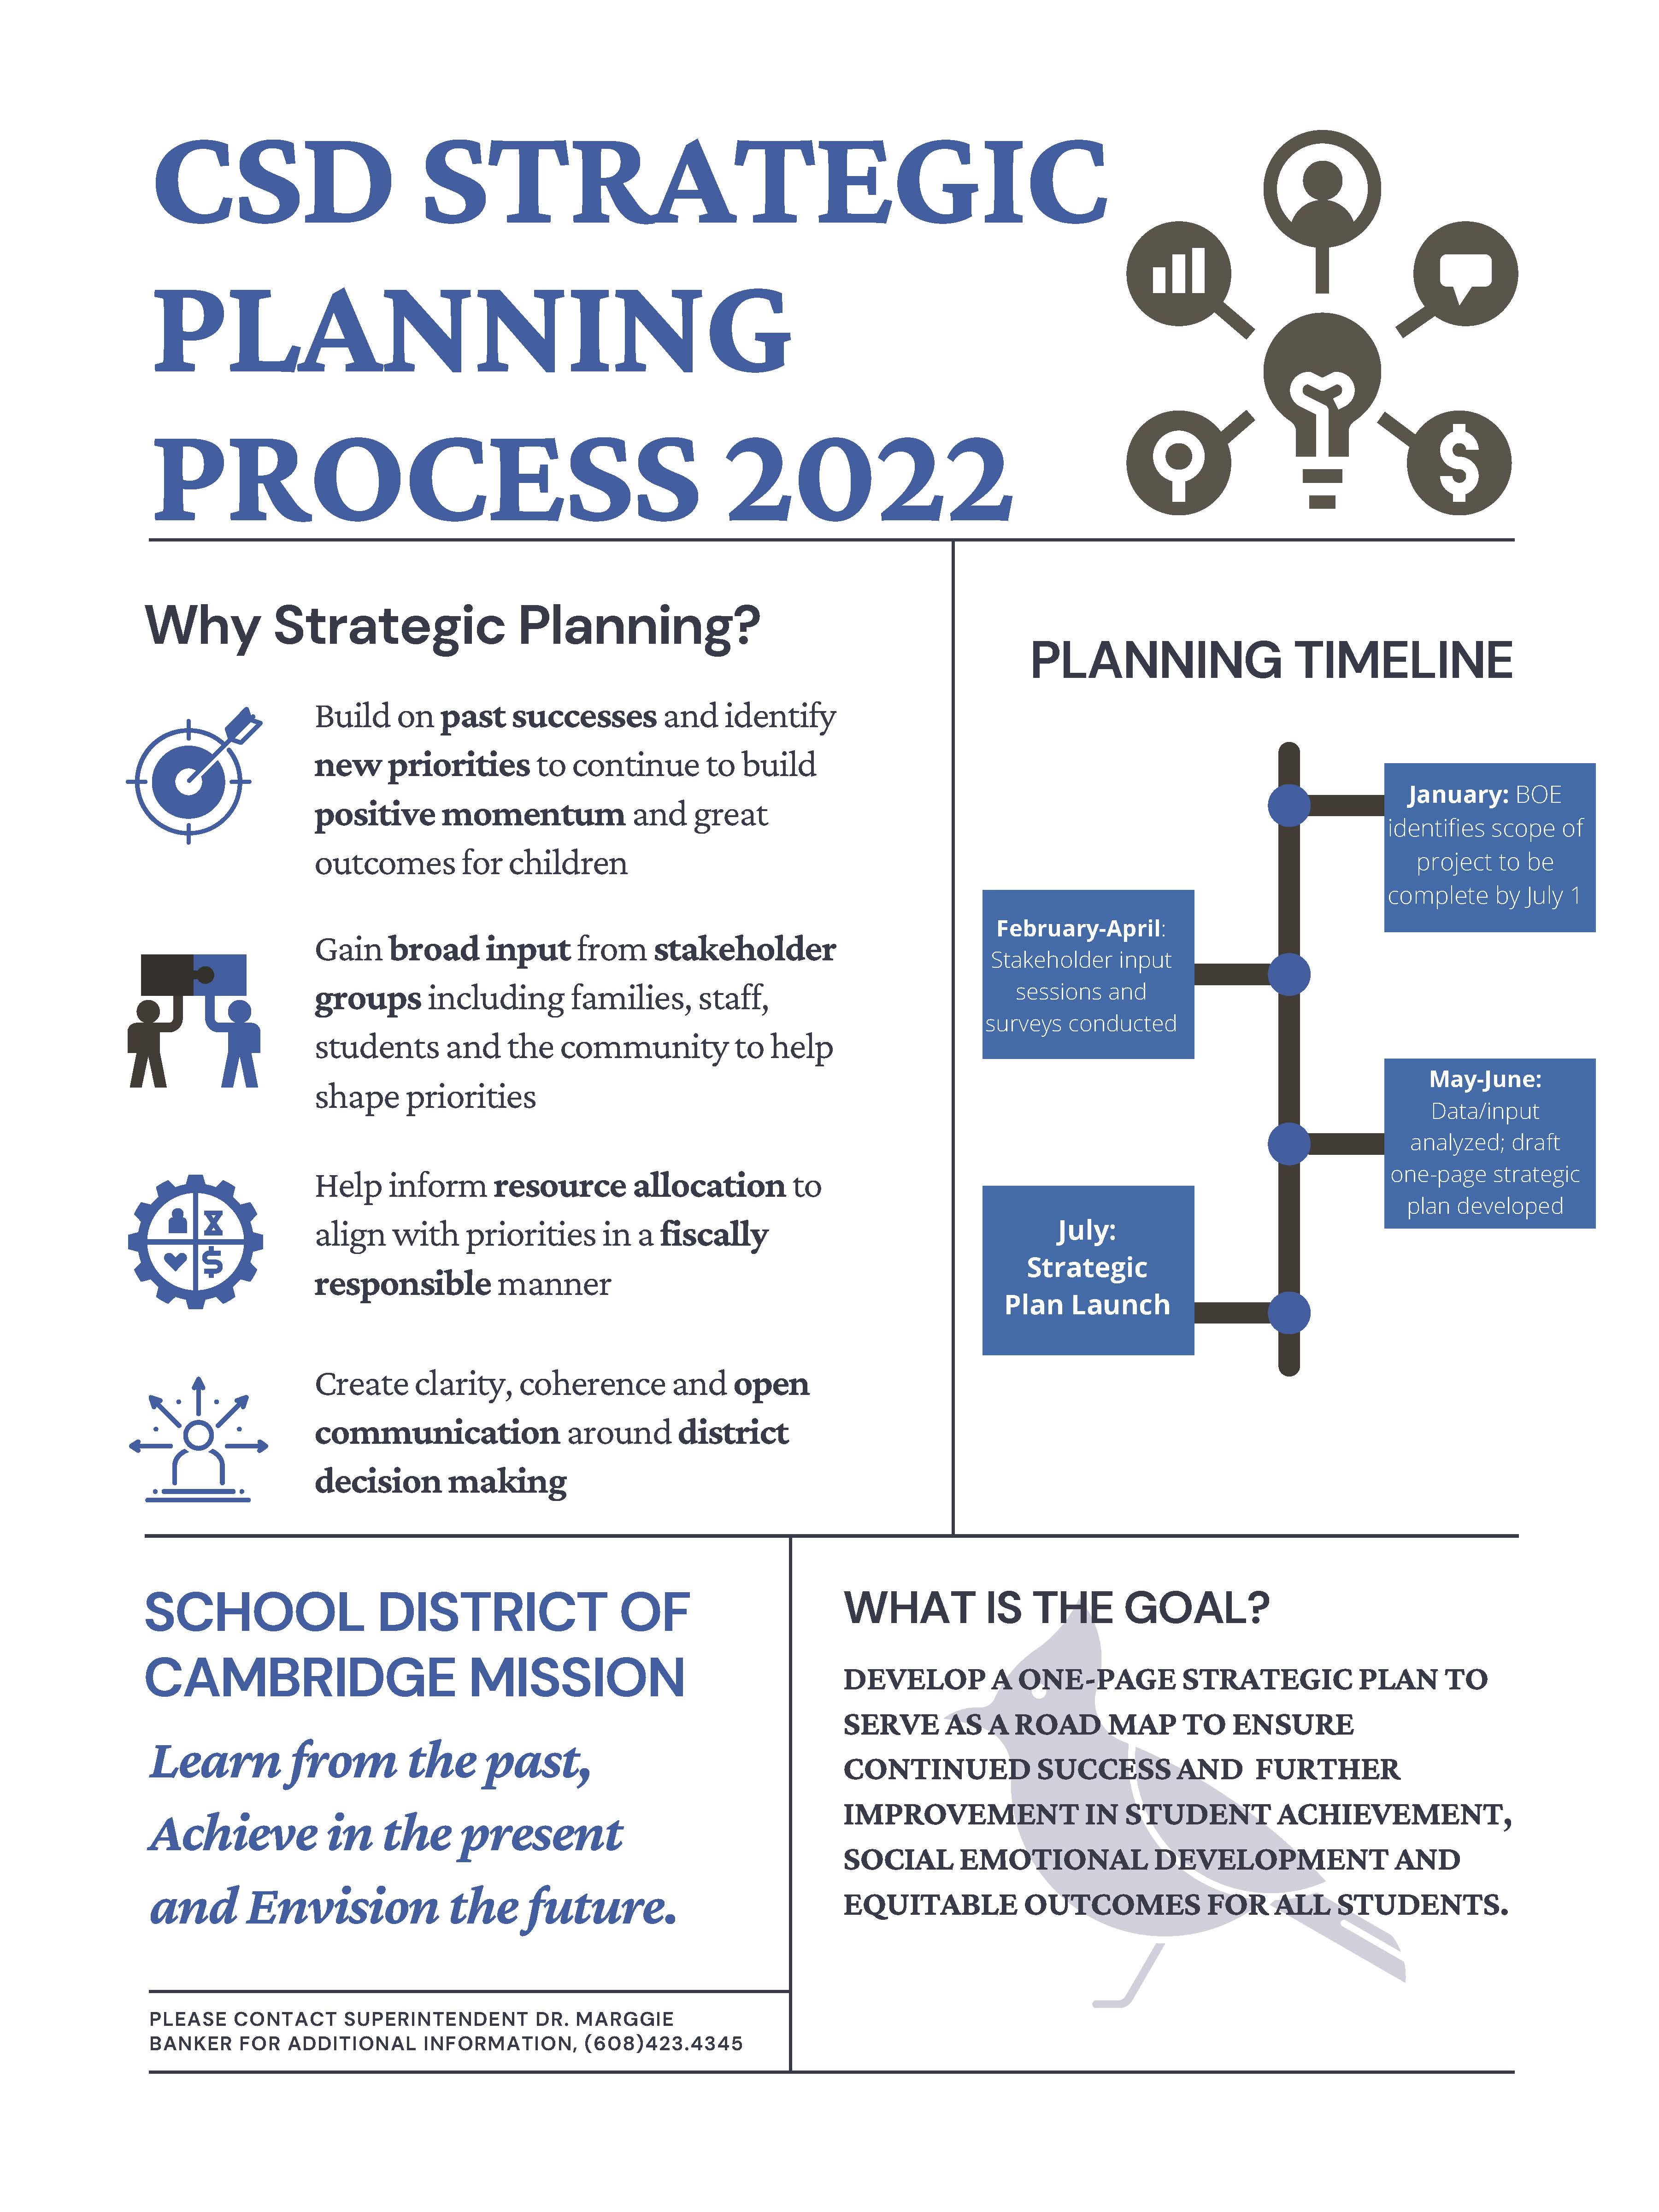 CSD Strategic Planning Process Intro